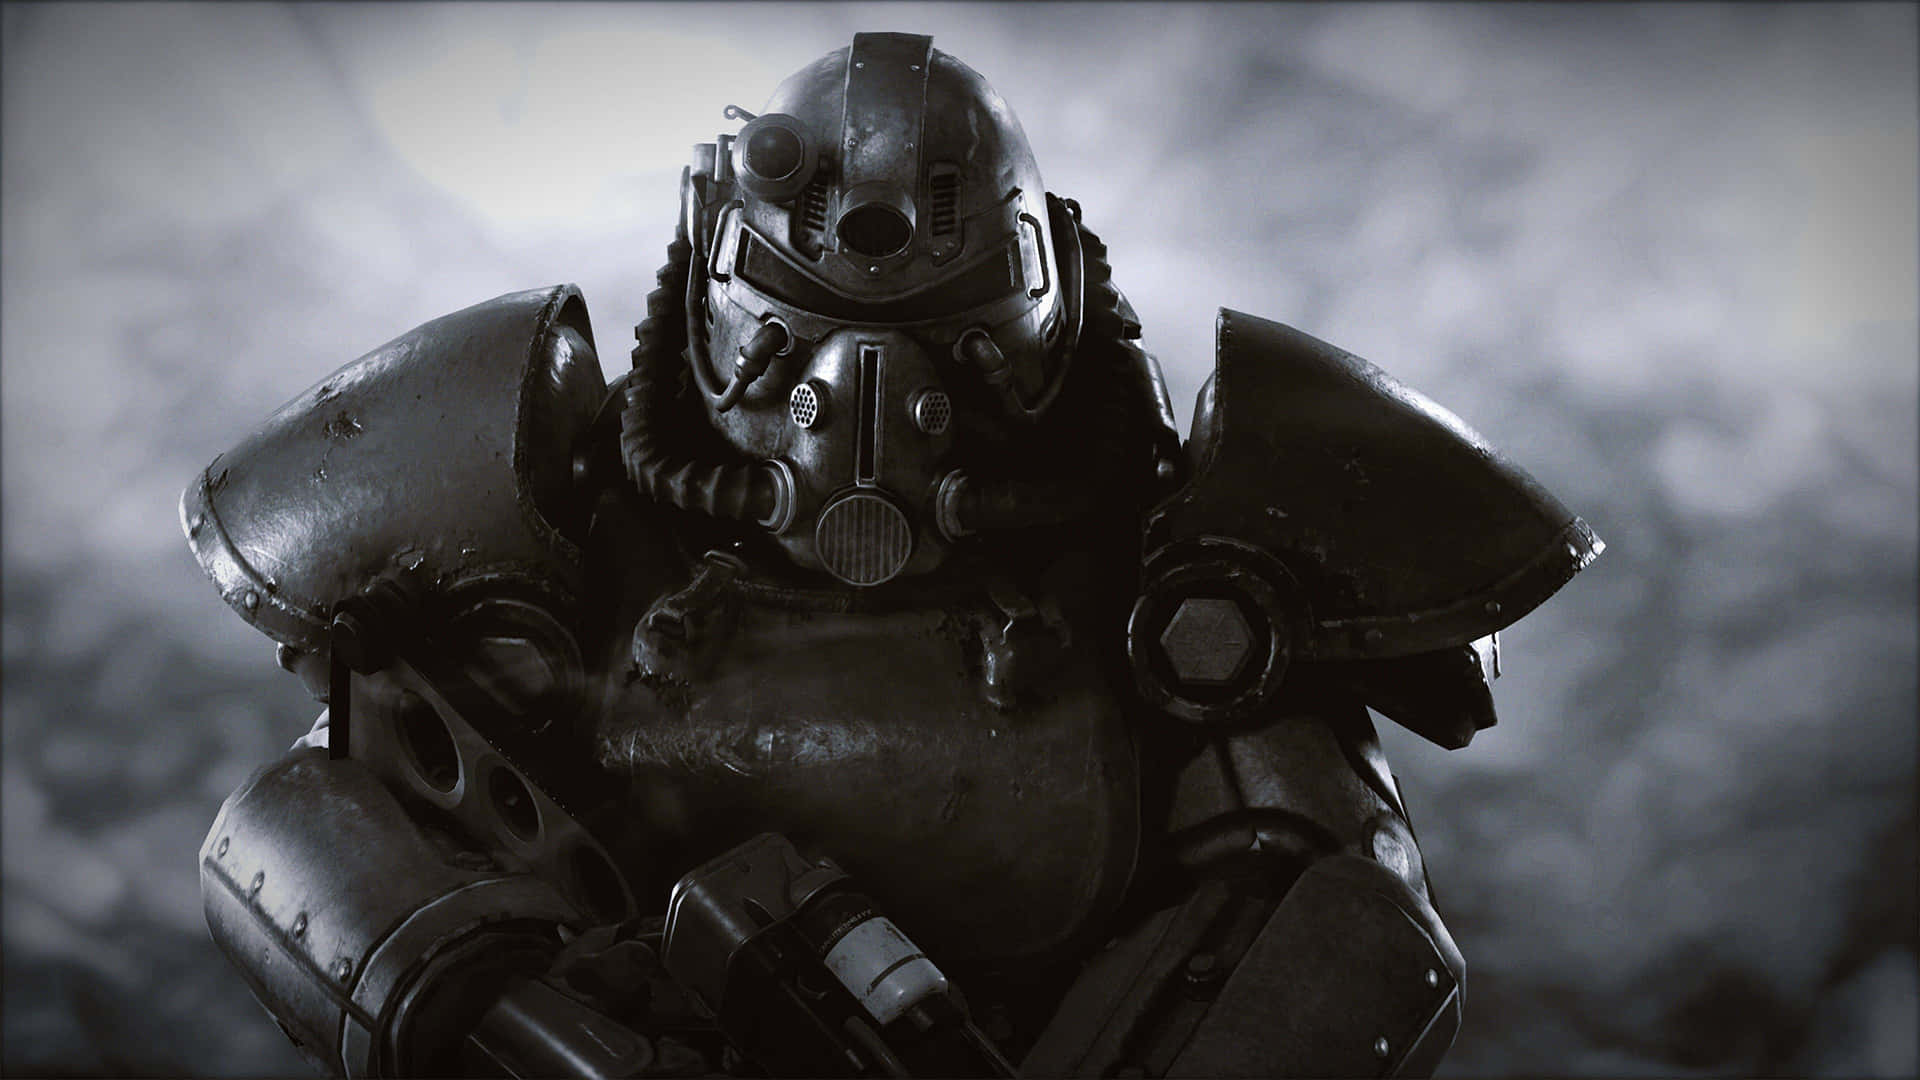 Warrior in Advanced Power Armor in Fallout 4 Wallpaper